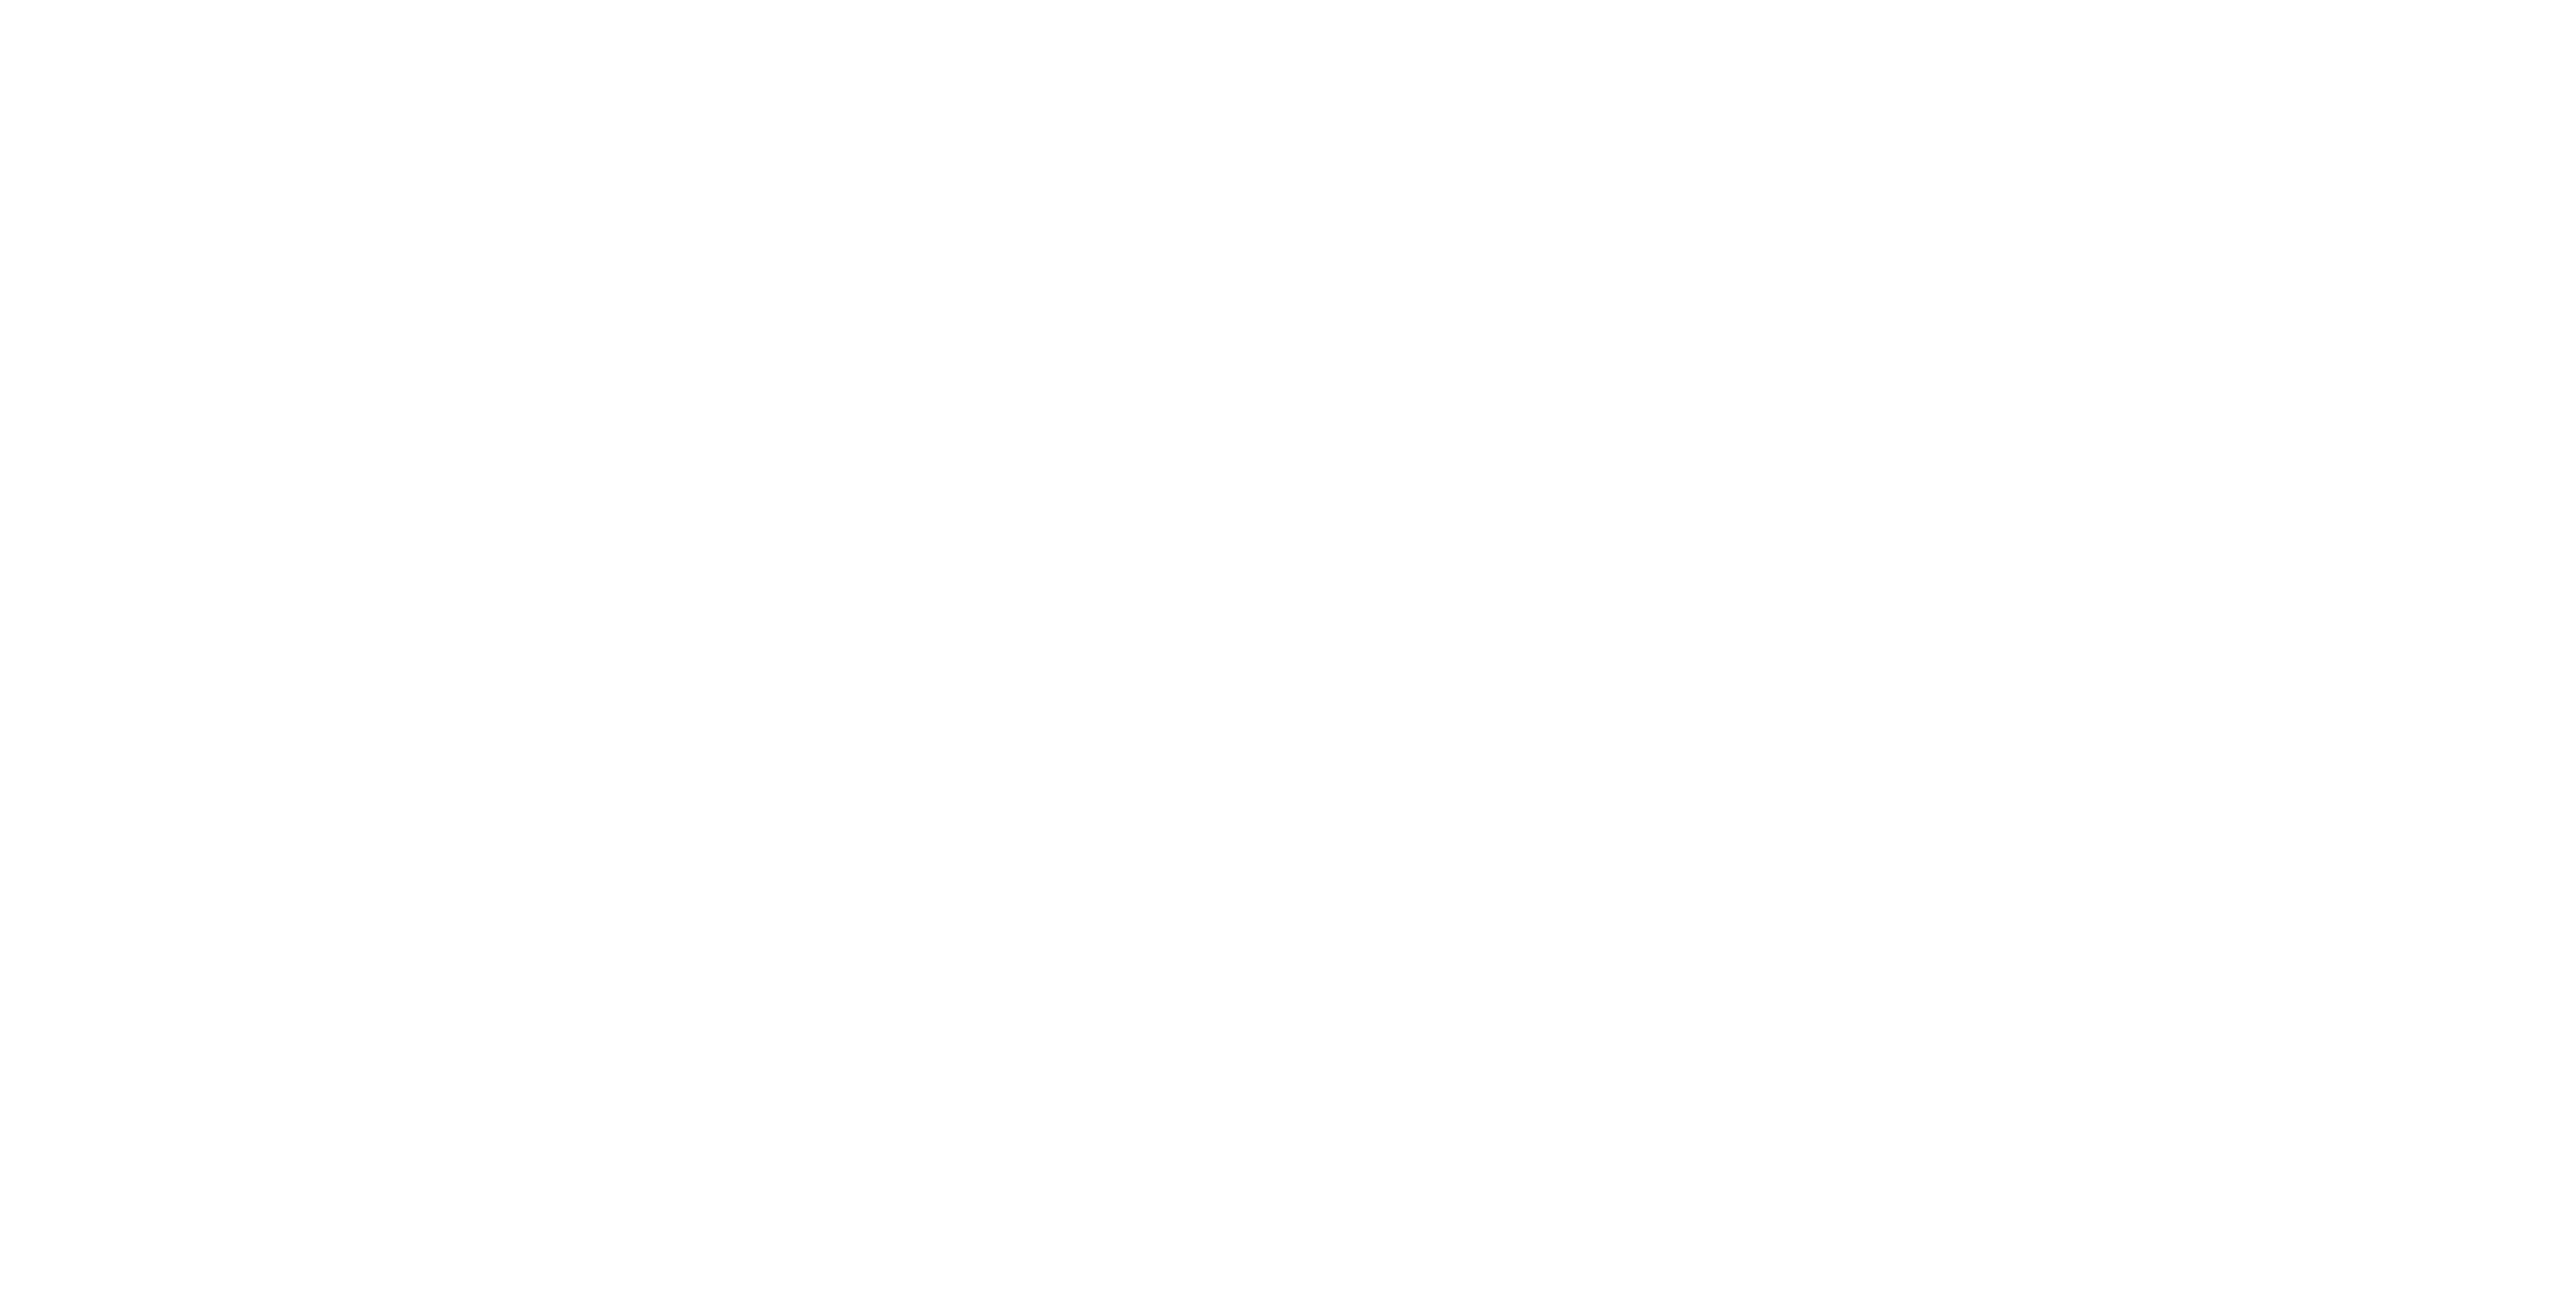 Complex Maintenance